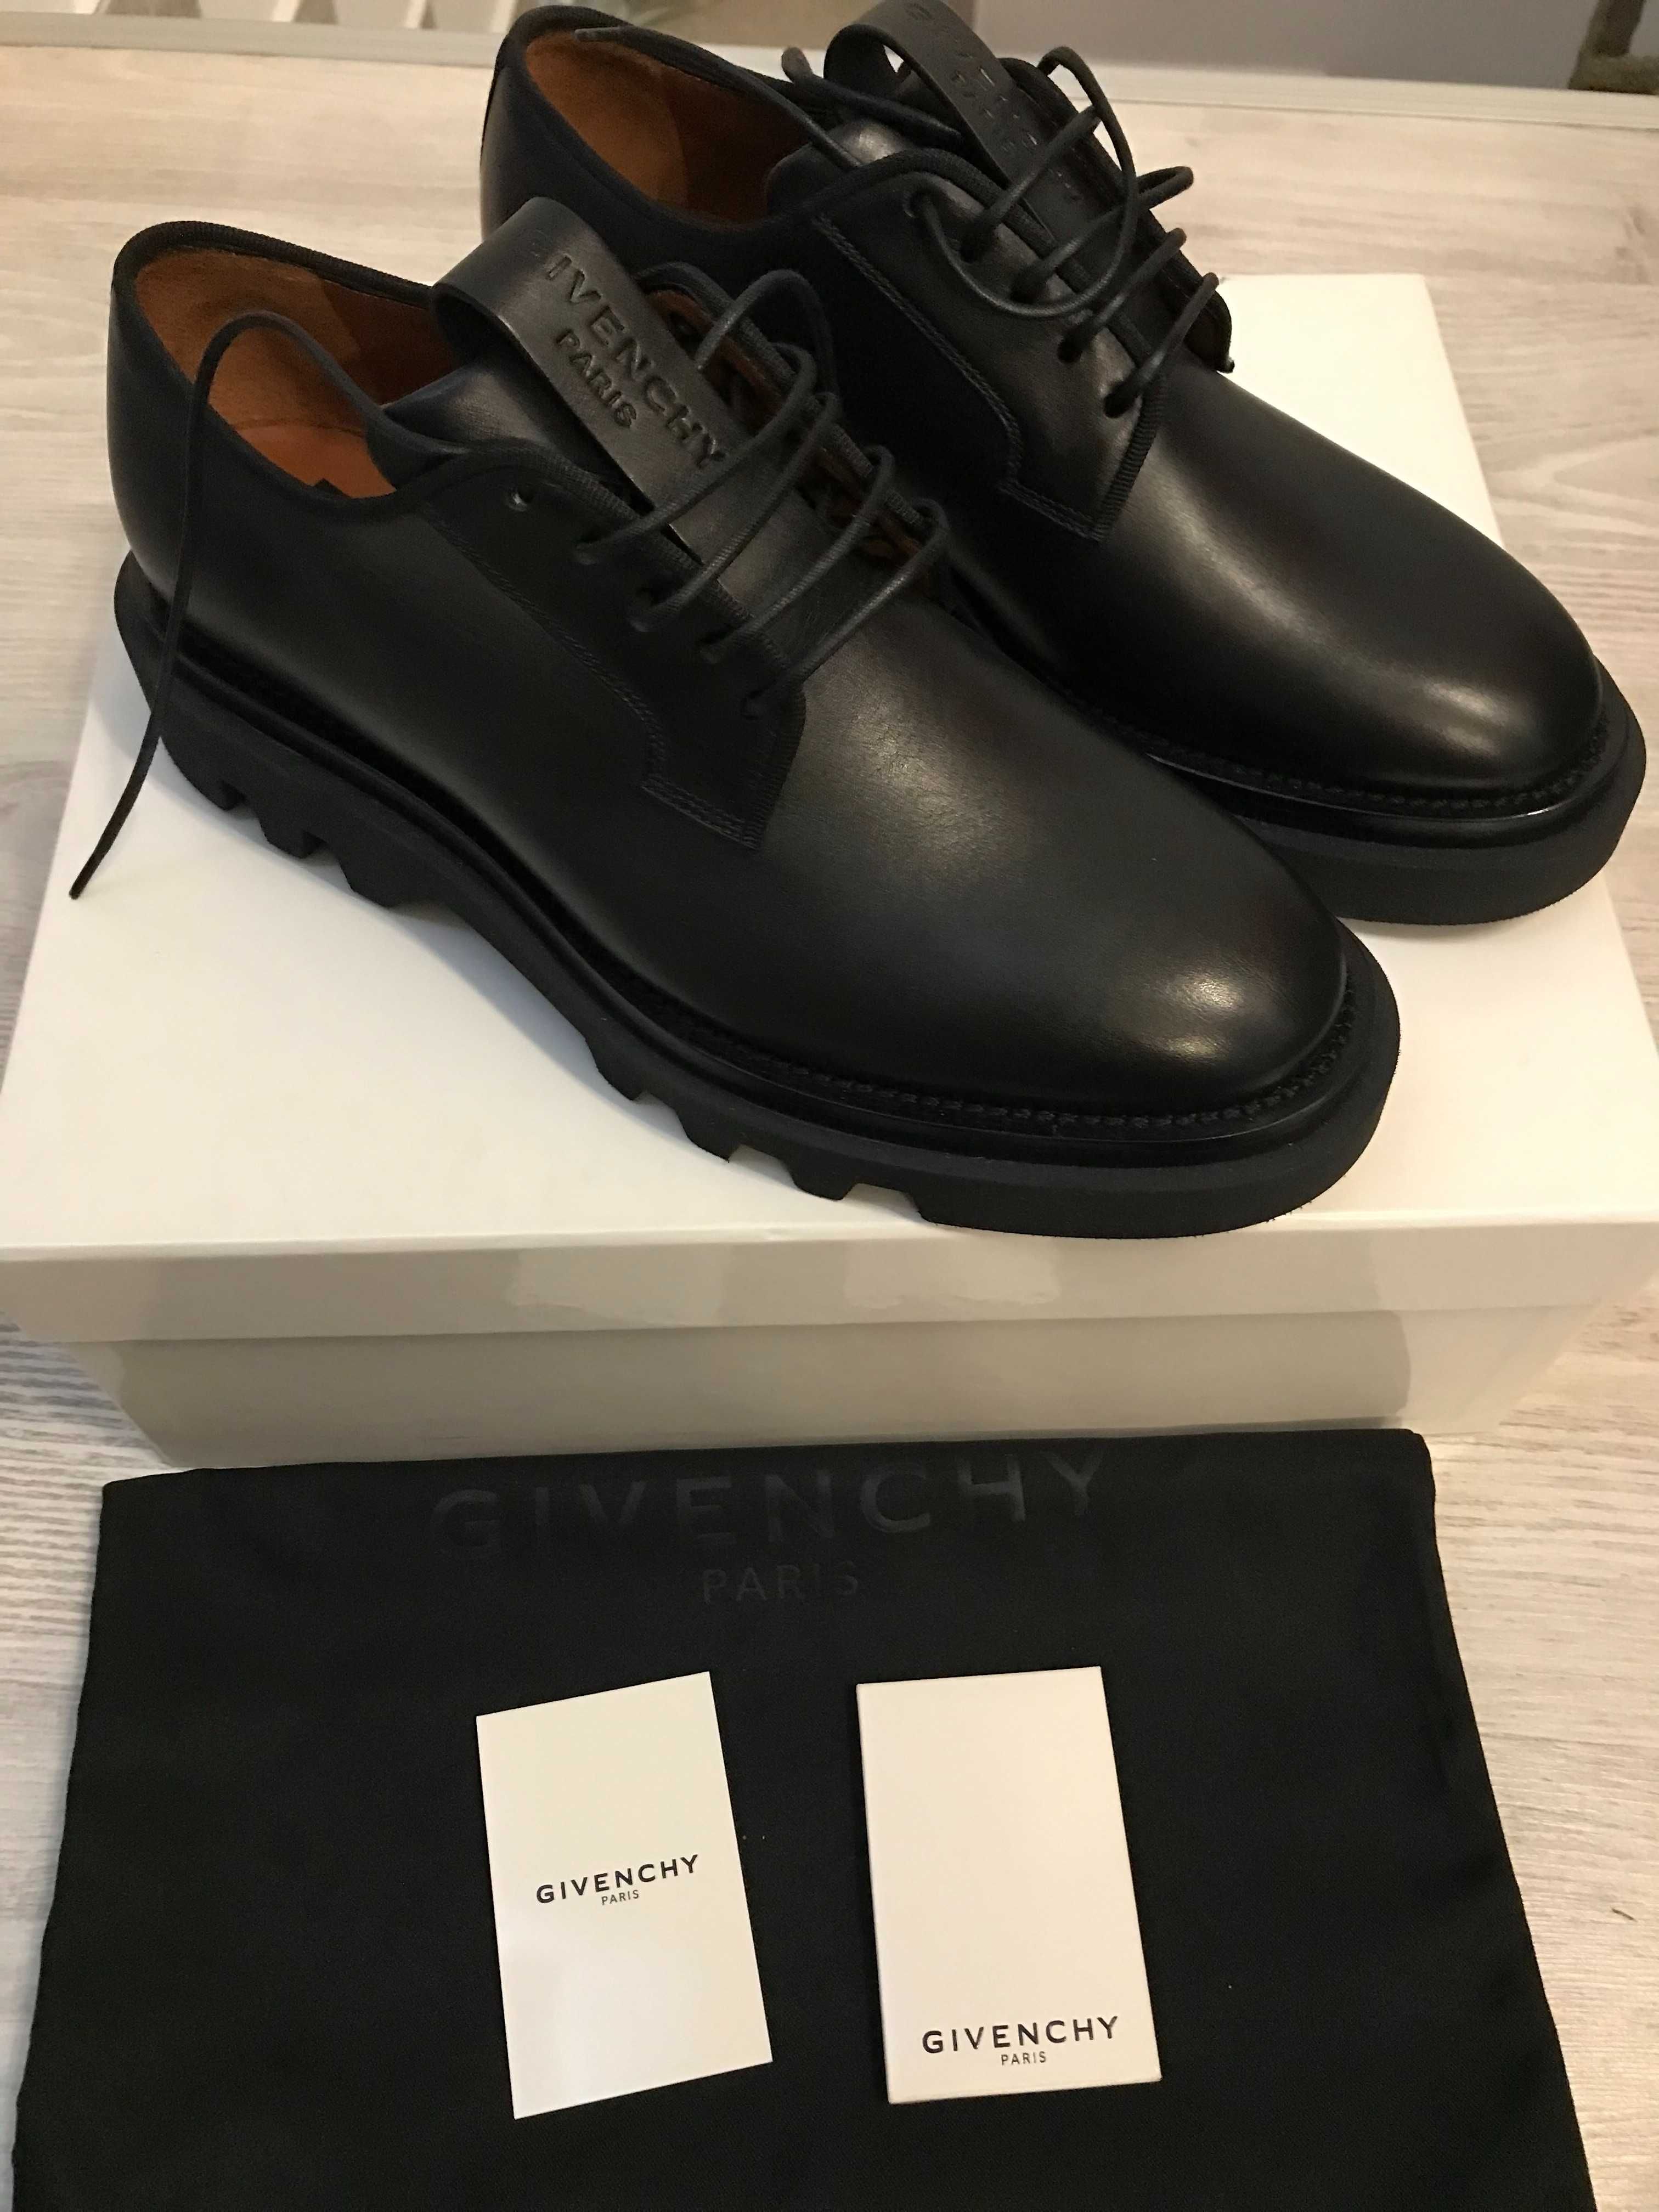 Givency pantofi 40, autentici, full box, retail price 835 euro